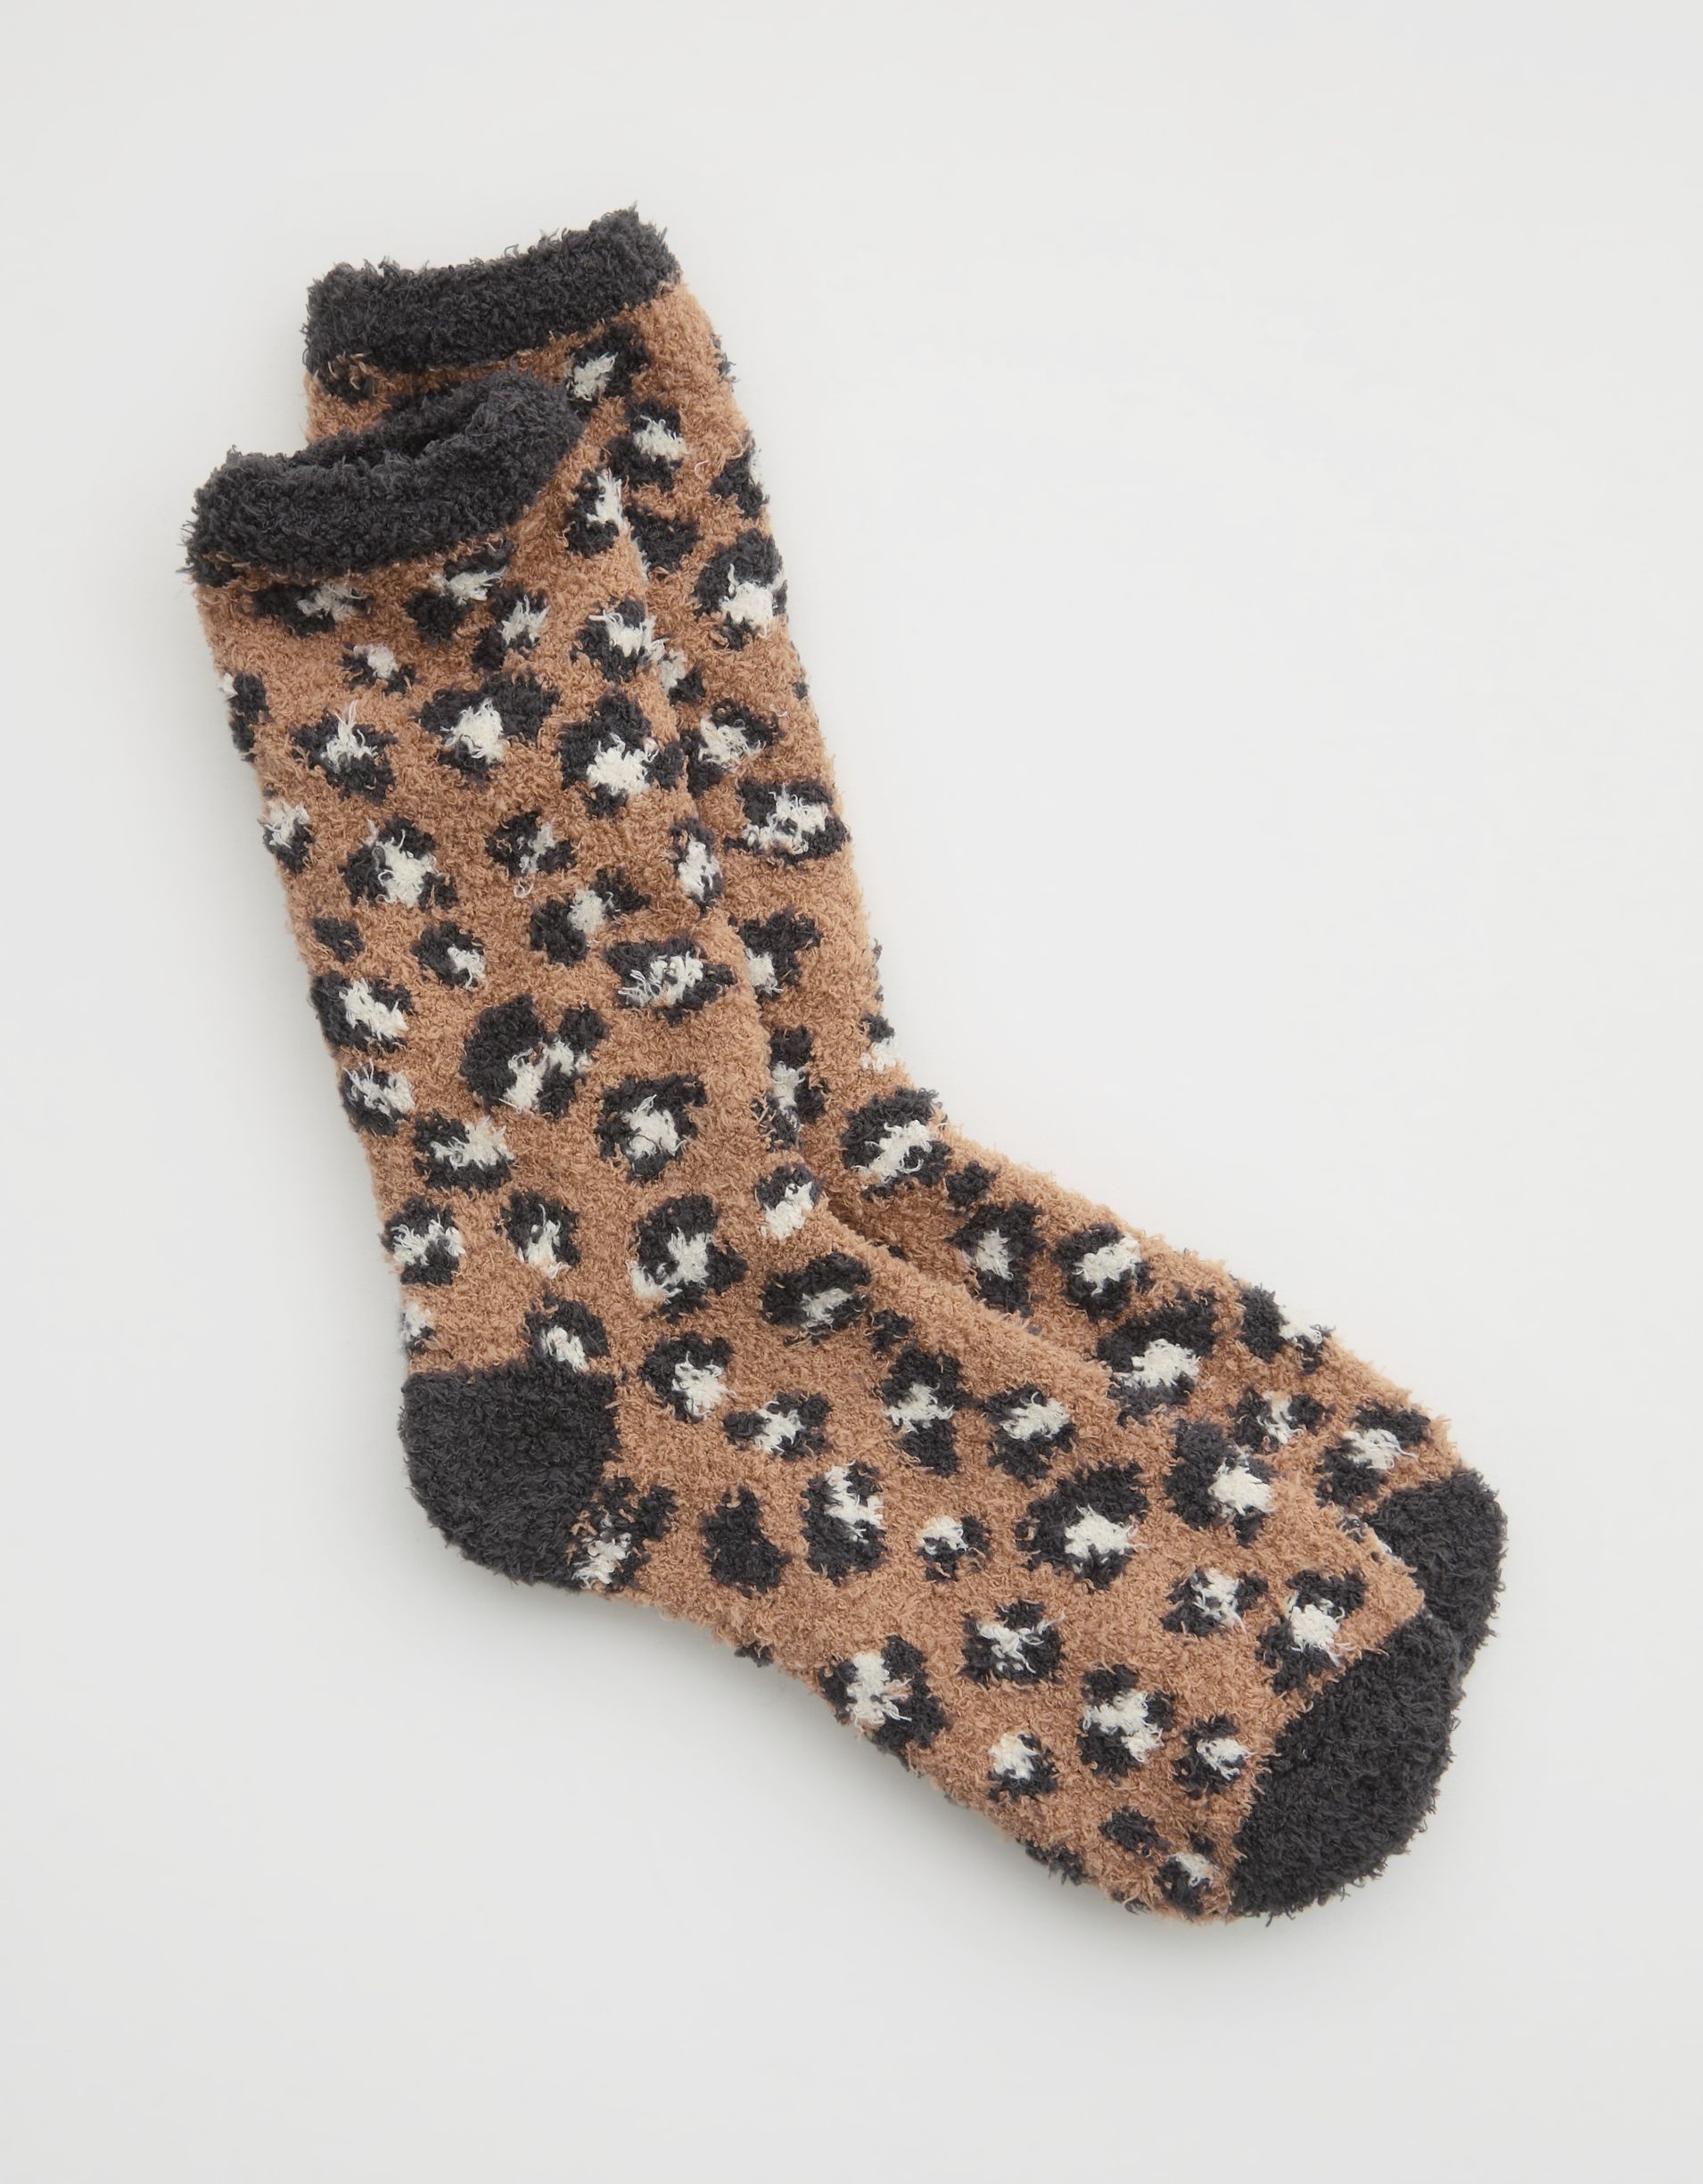 The socks in cheetah print